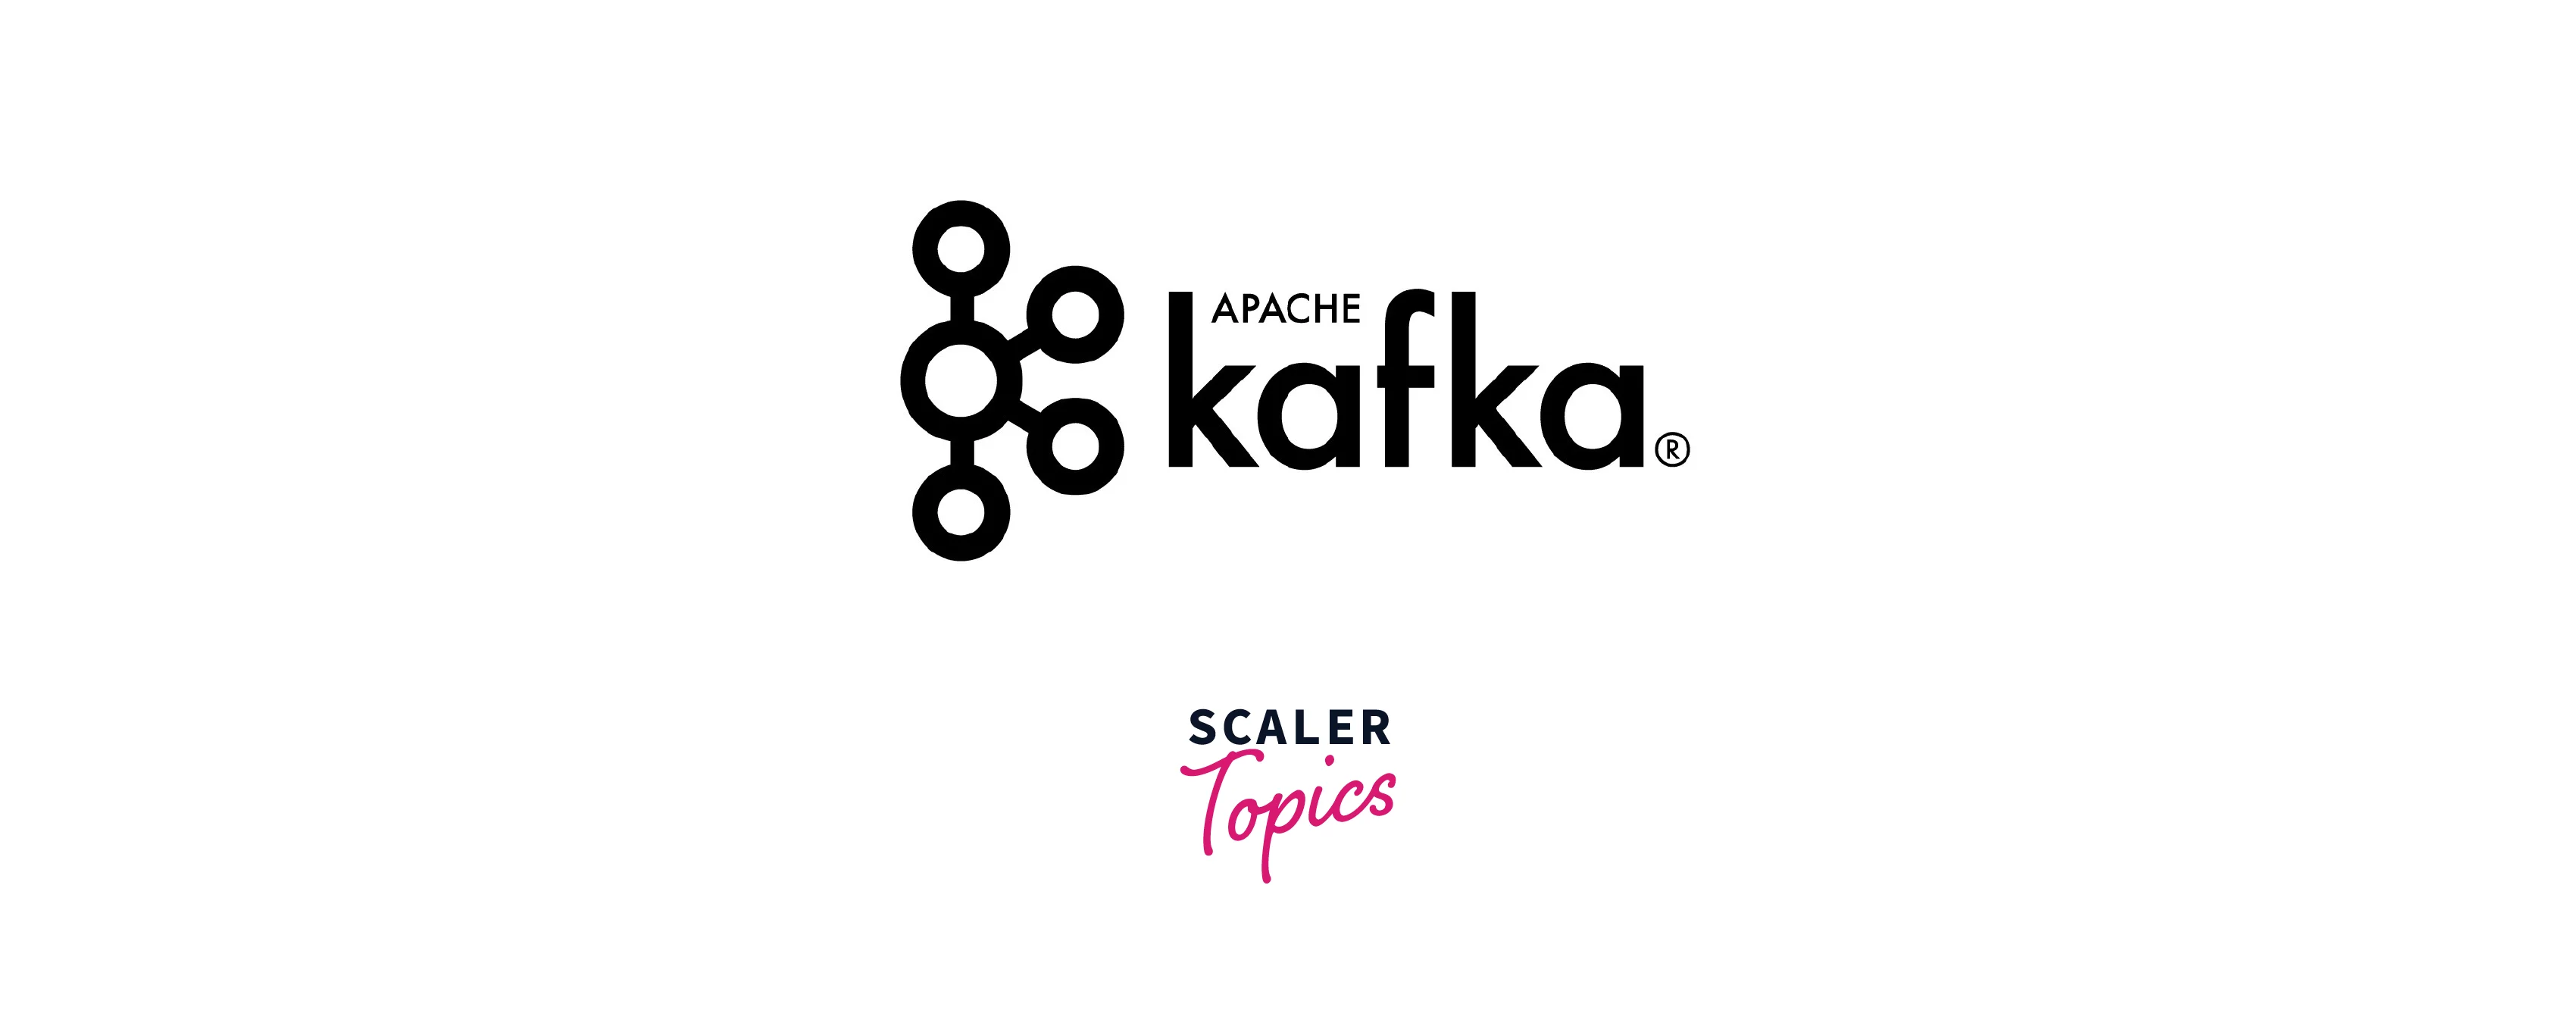 apache kafka logos